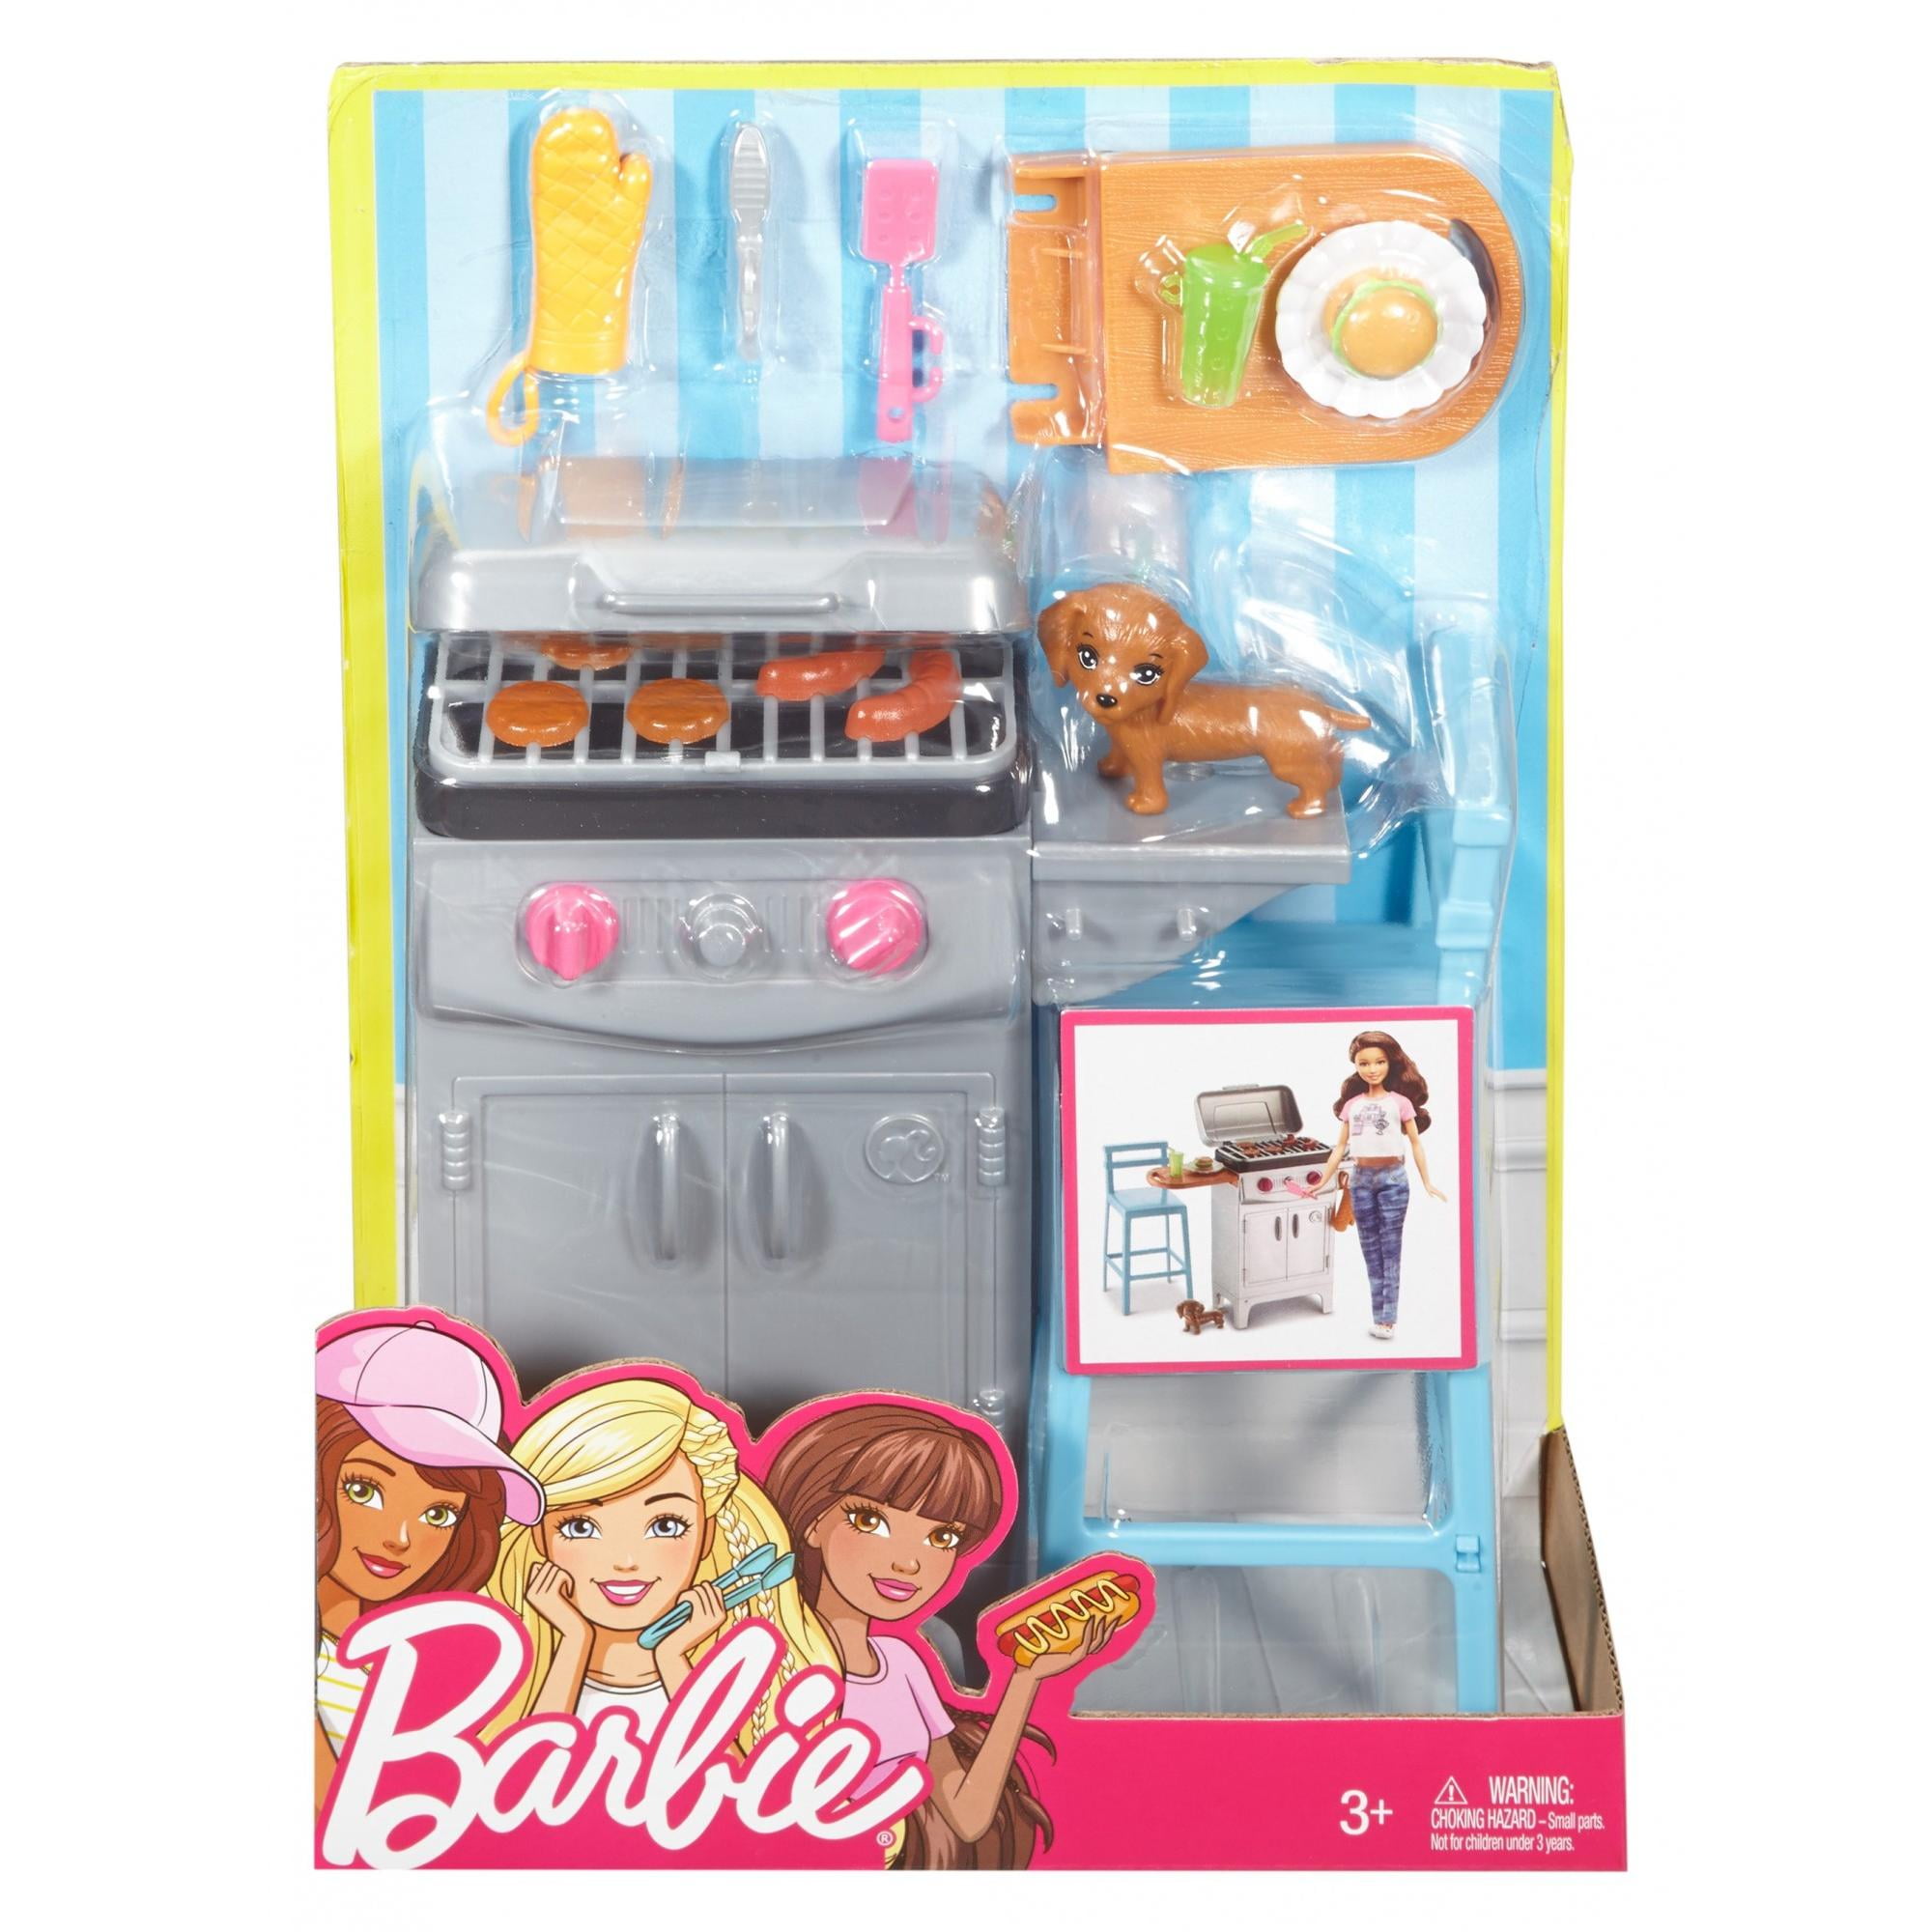 barbecue barbie